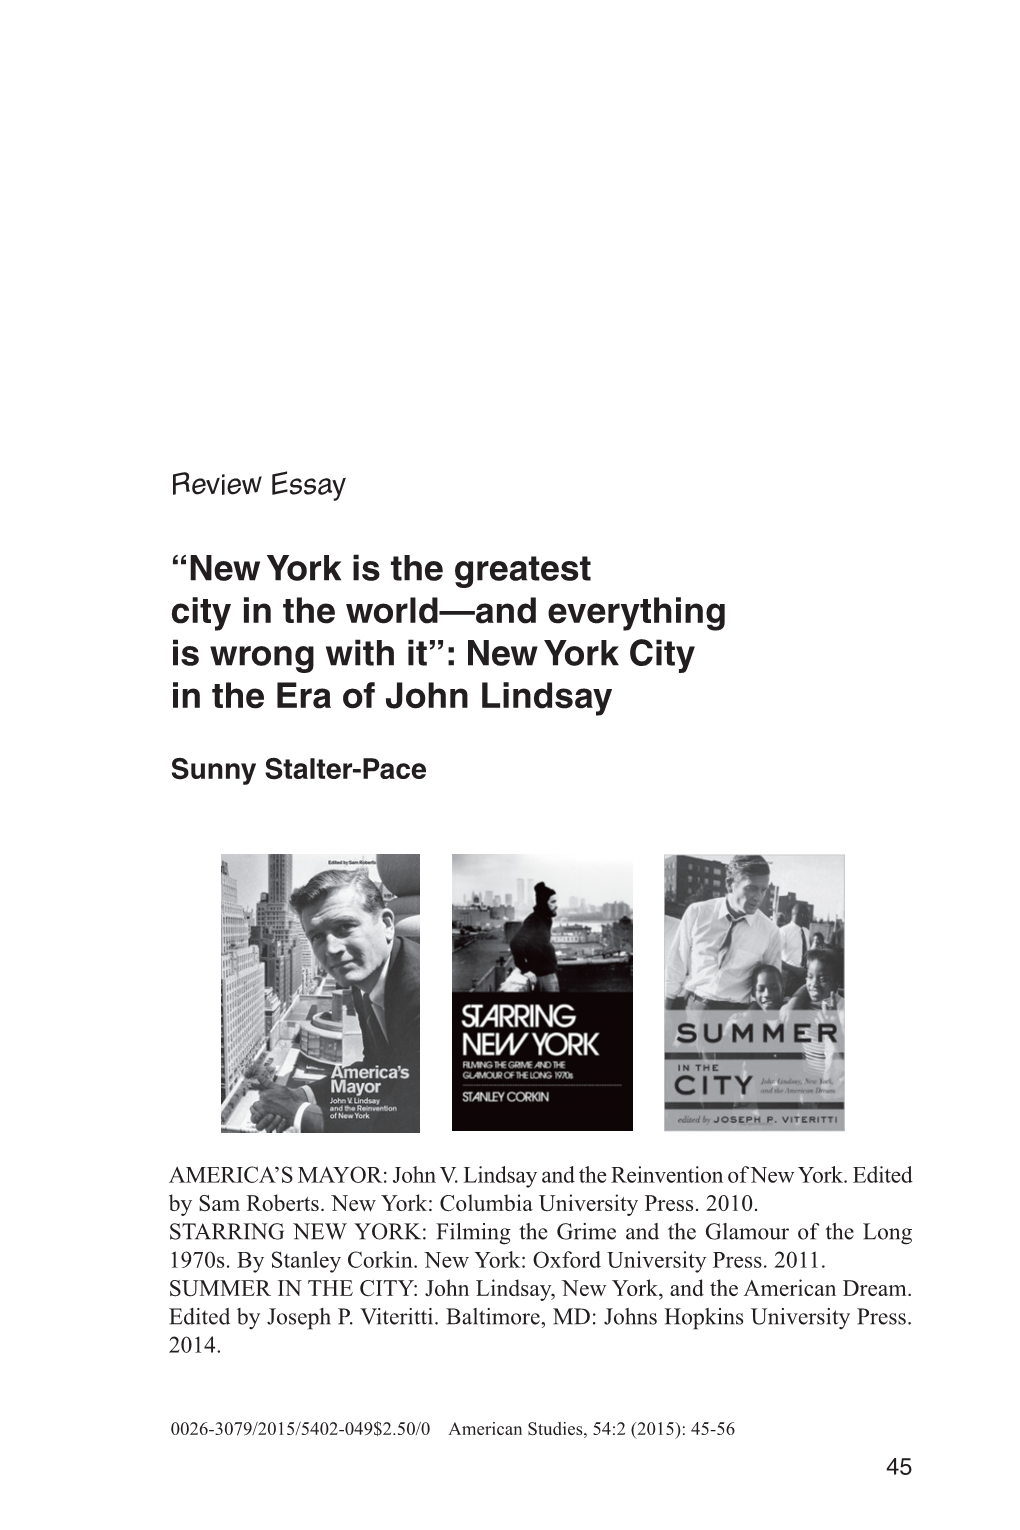 New York City in the Era of John Lindsay